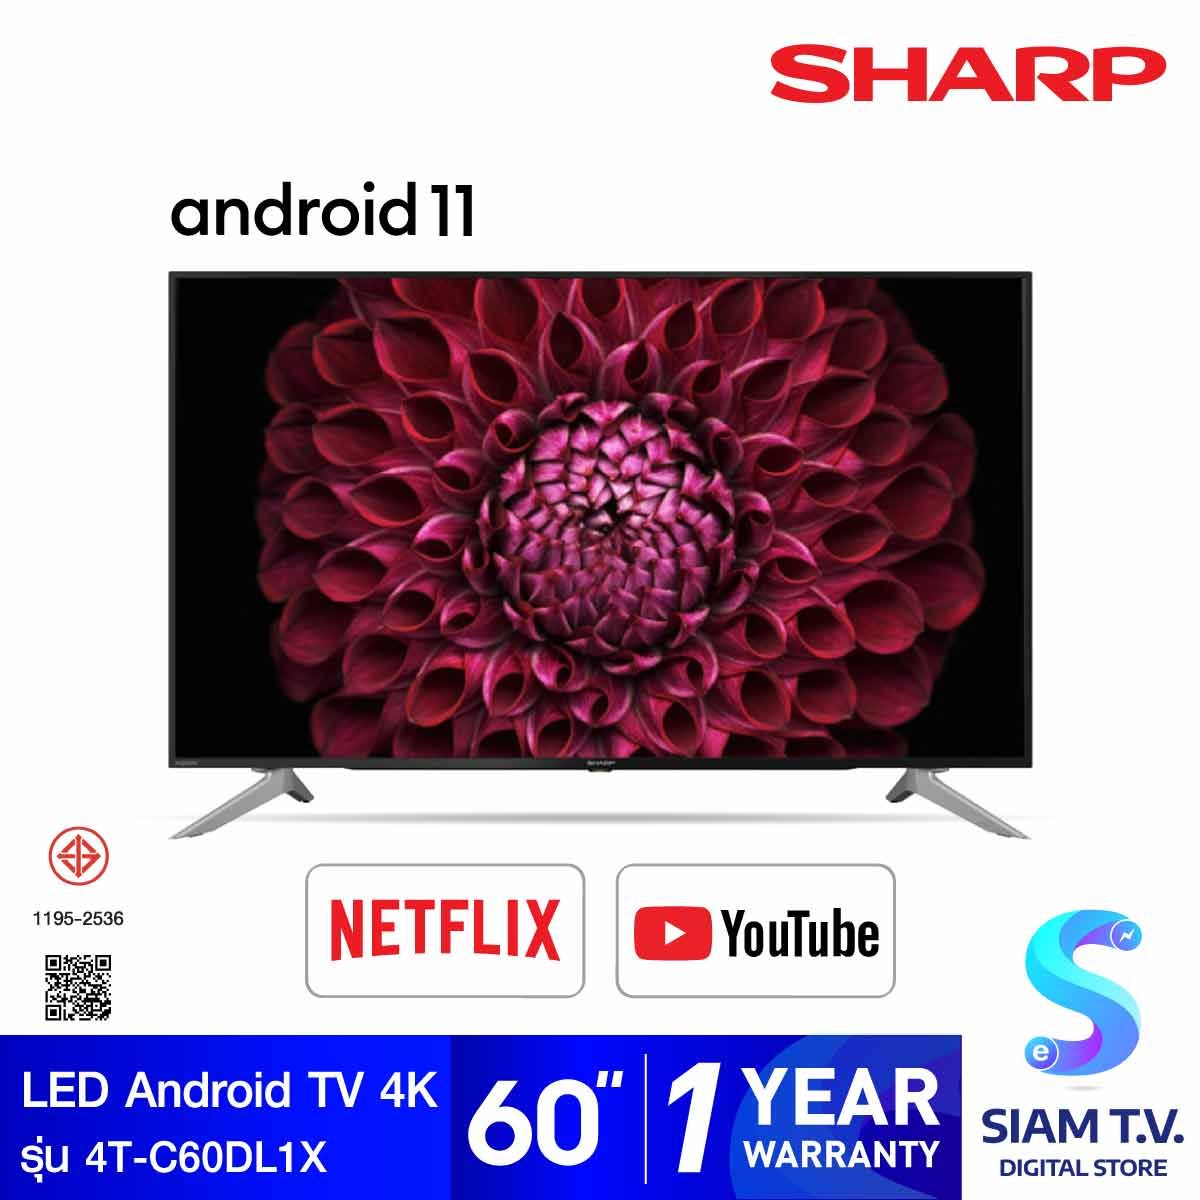 SHARP AQUOS LED Android TV 4K รุ่น 4T-C60DL1X  สมาร์ททีวี 60 นิ้ว Android 11 ปี2023